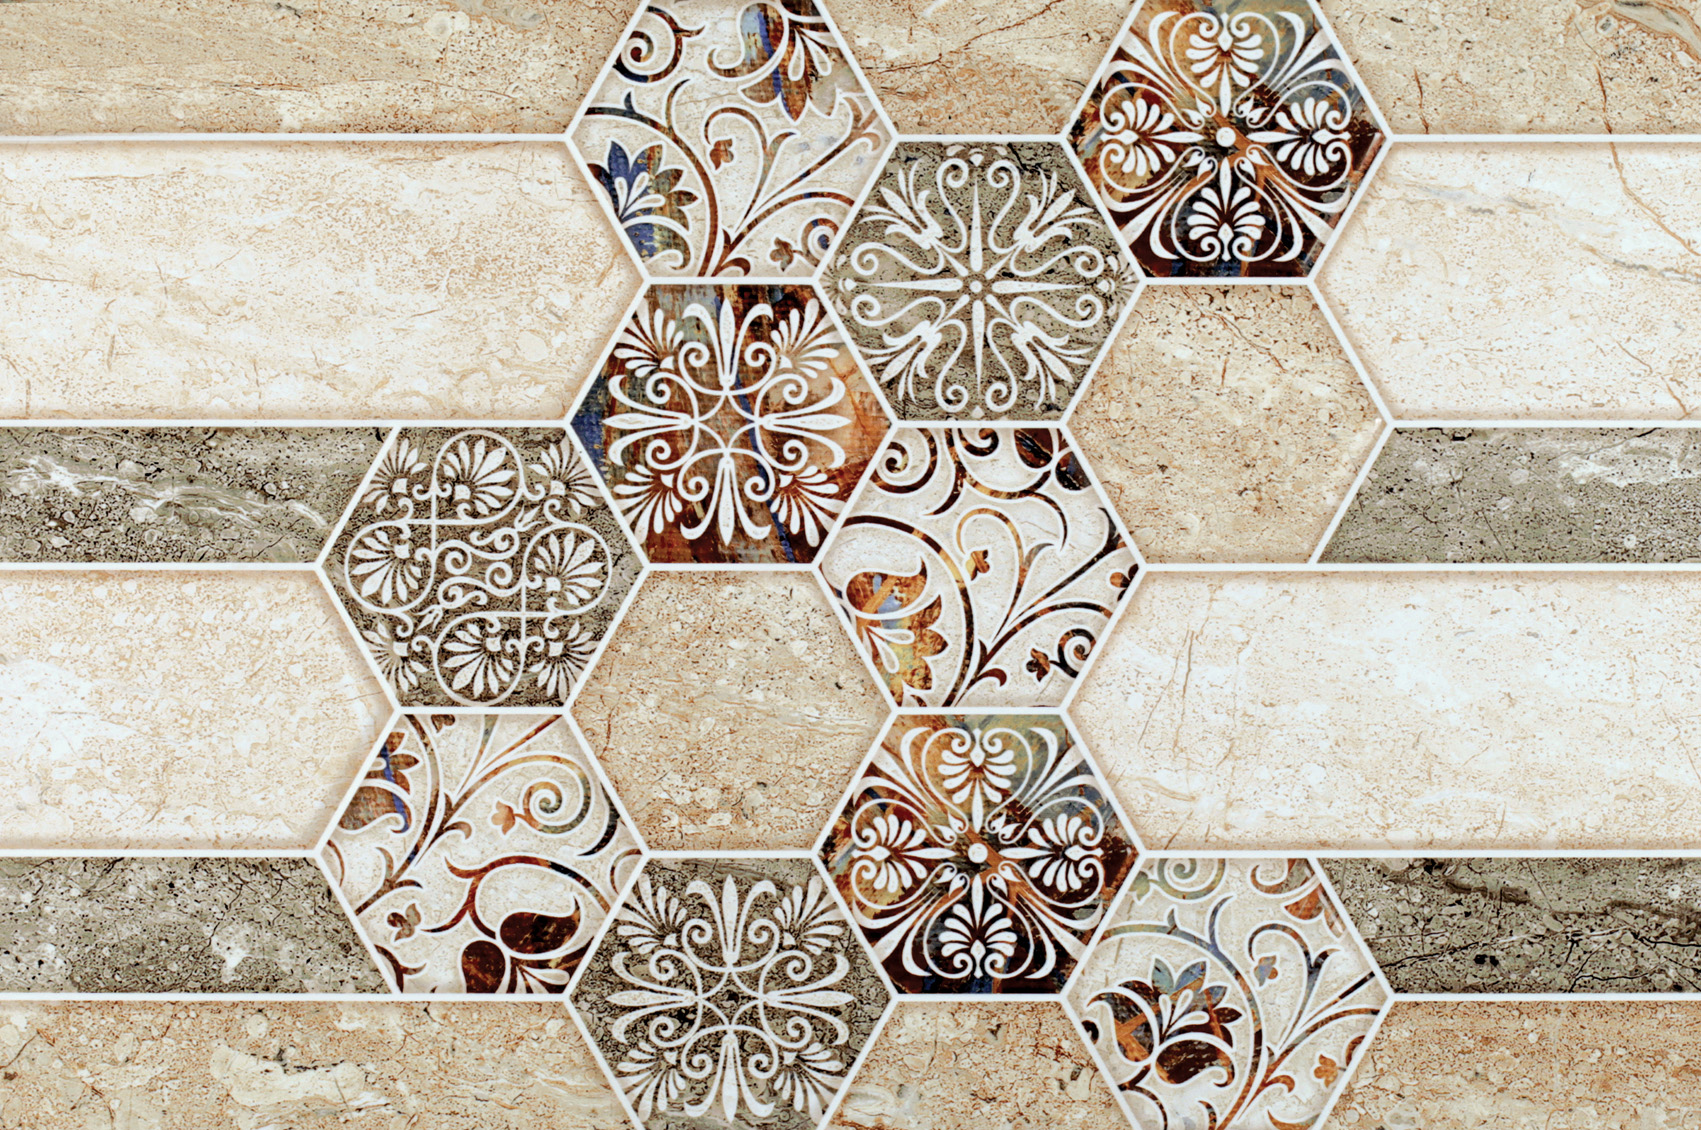 Hexagonal Tiles for Bathroom Tiles, Kitchen Tiles, Accent Tiles